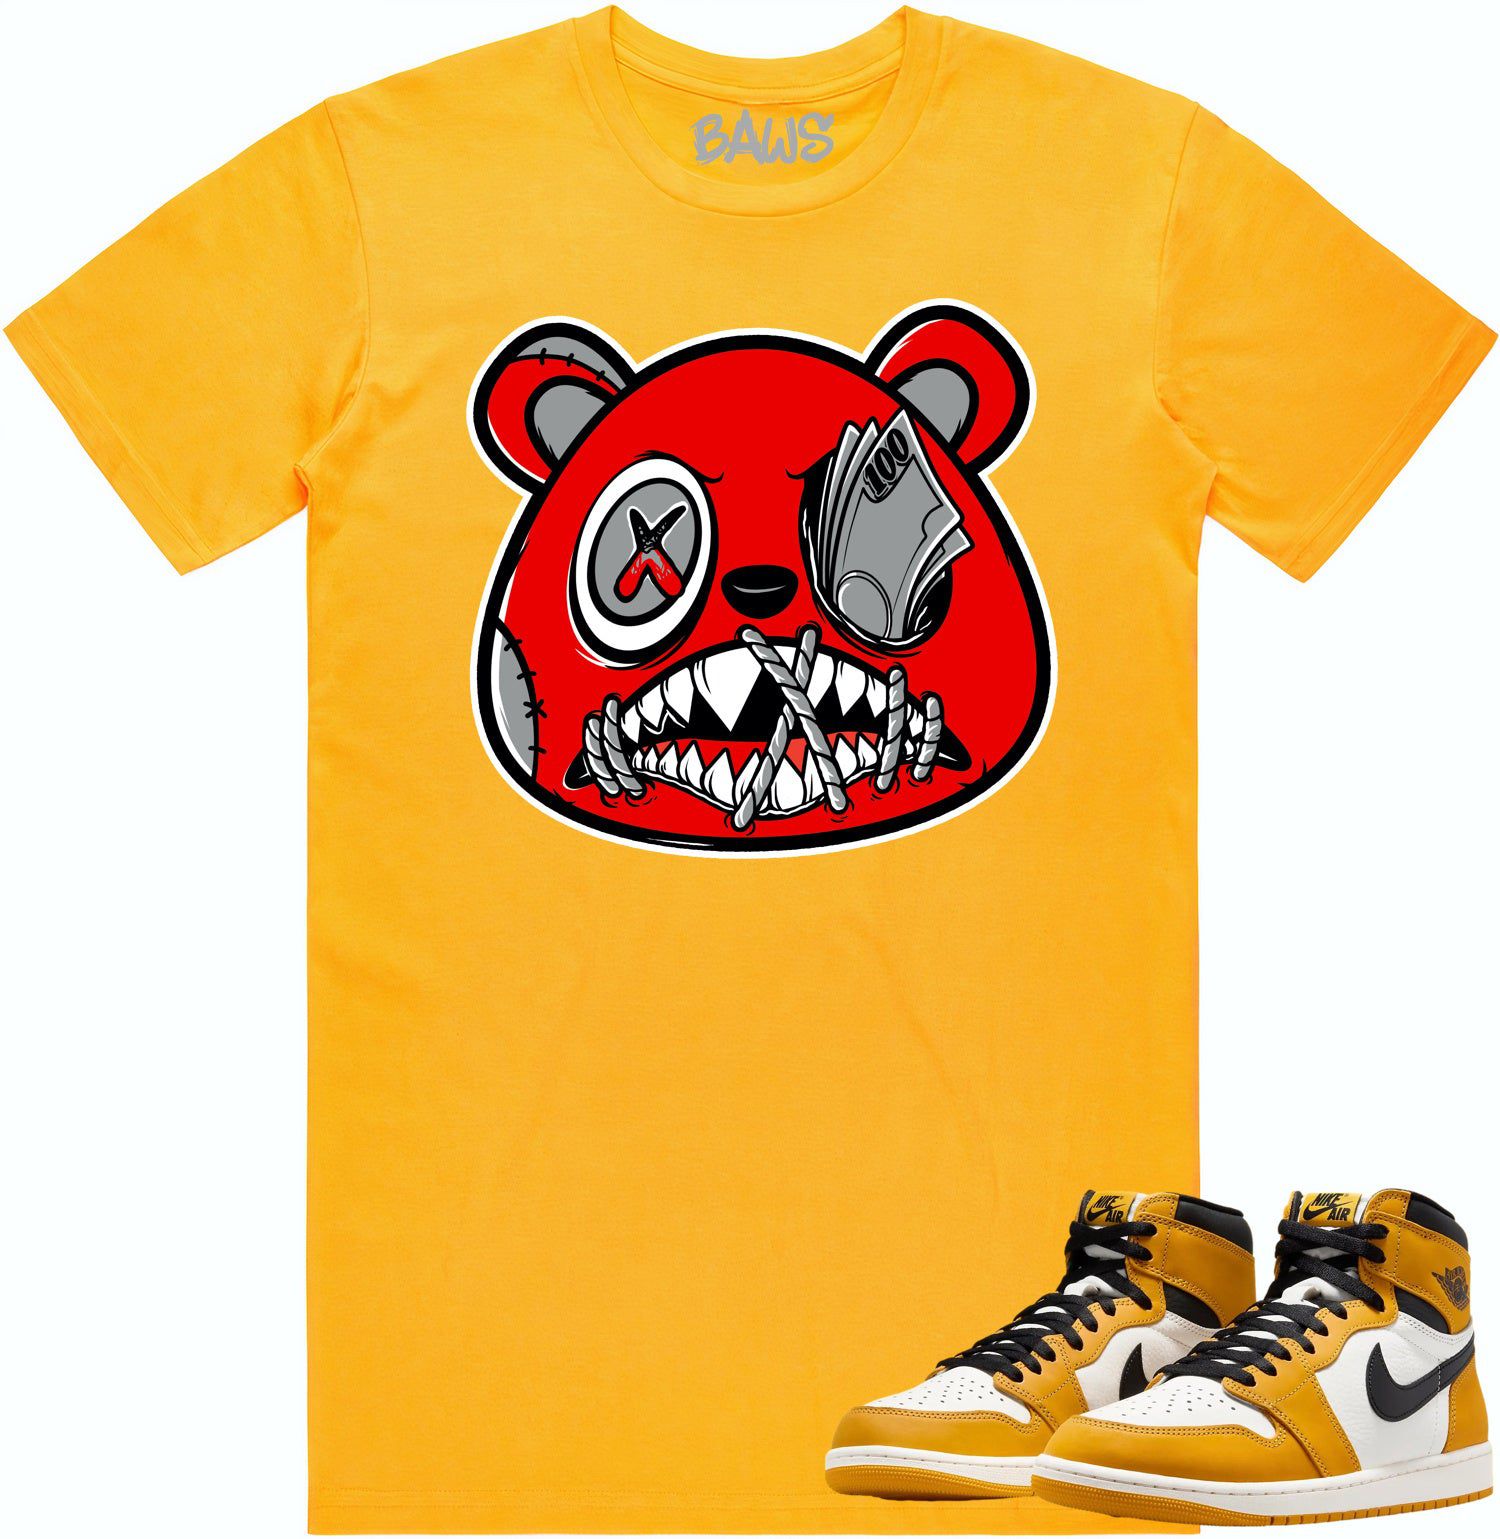 Yellow Ochre 1s Shirt - Jordan Retro 1 Sneaker Tees - Money Talks Baws